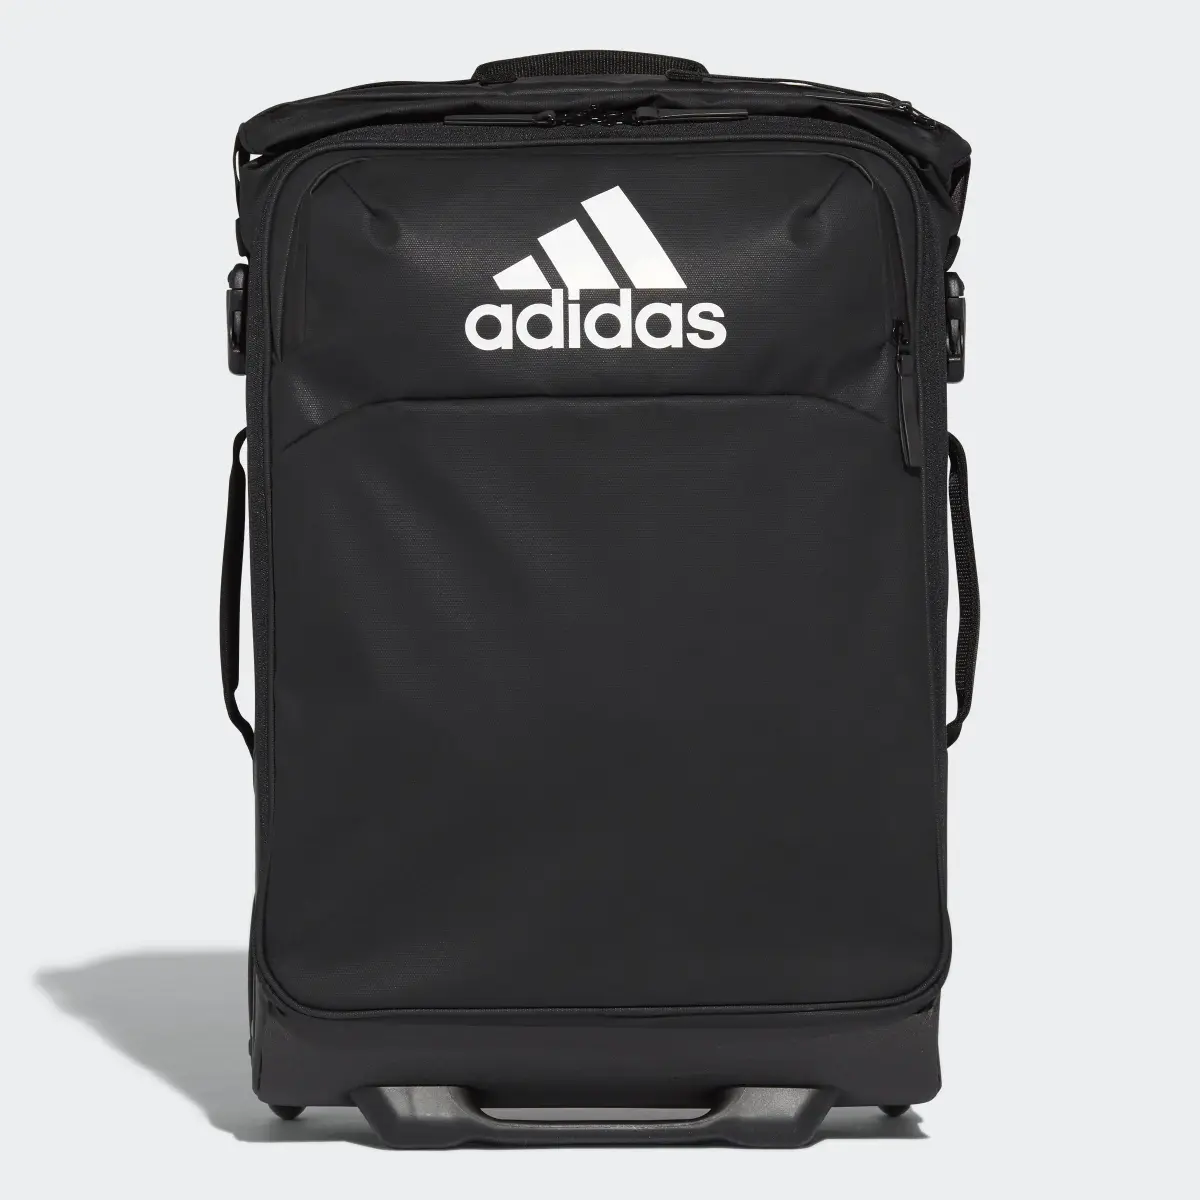 Adidas Roller Bag Small. 1